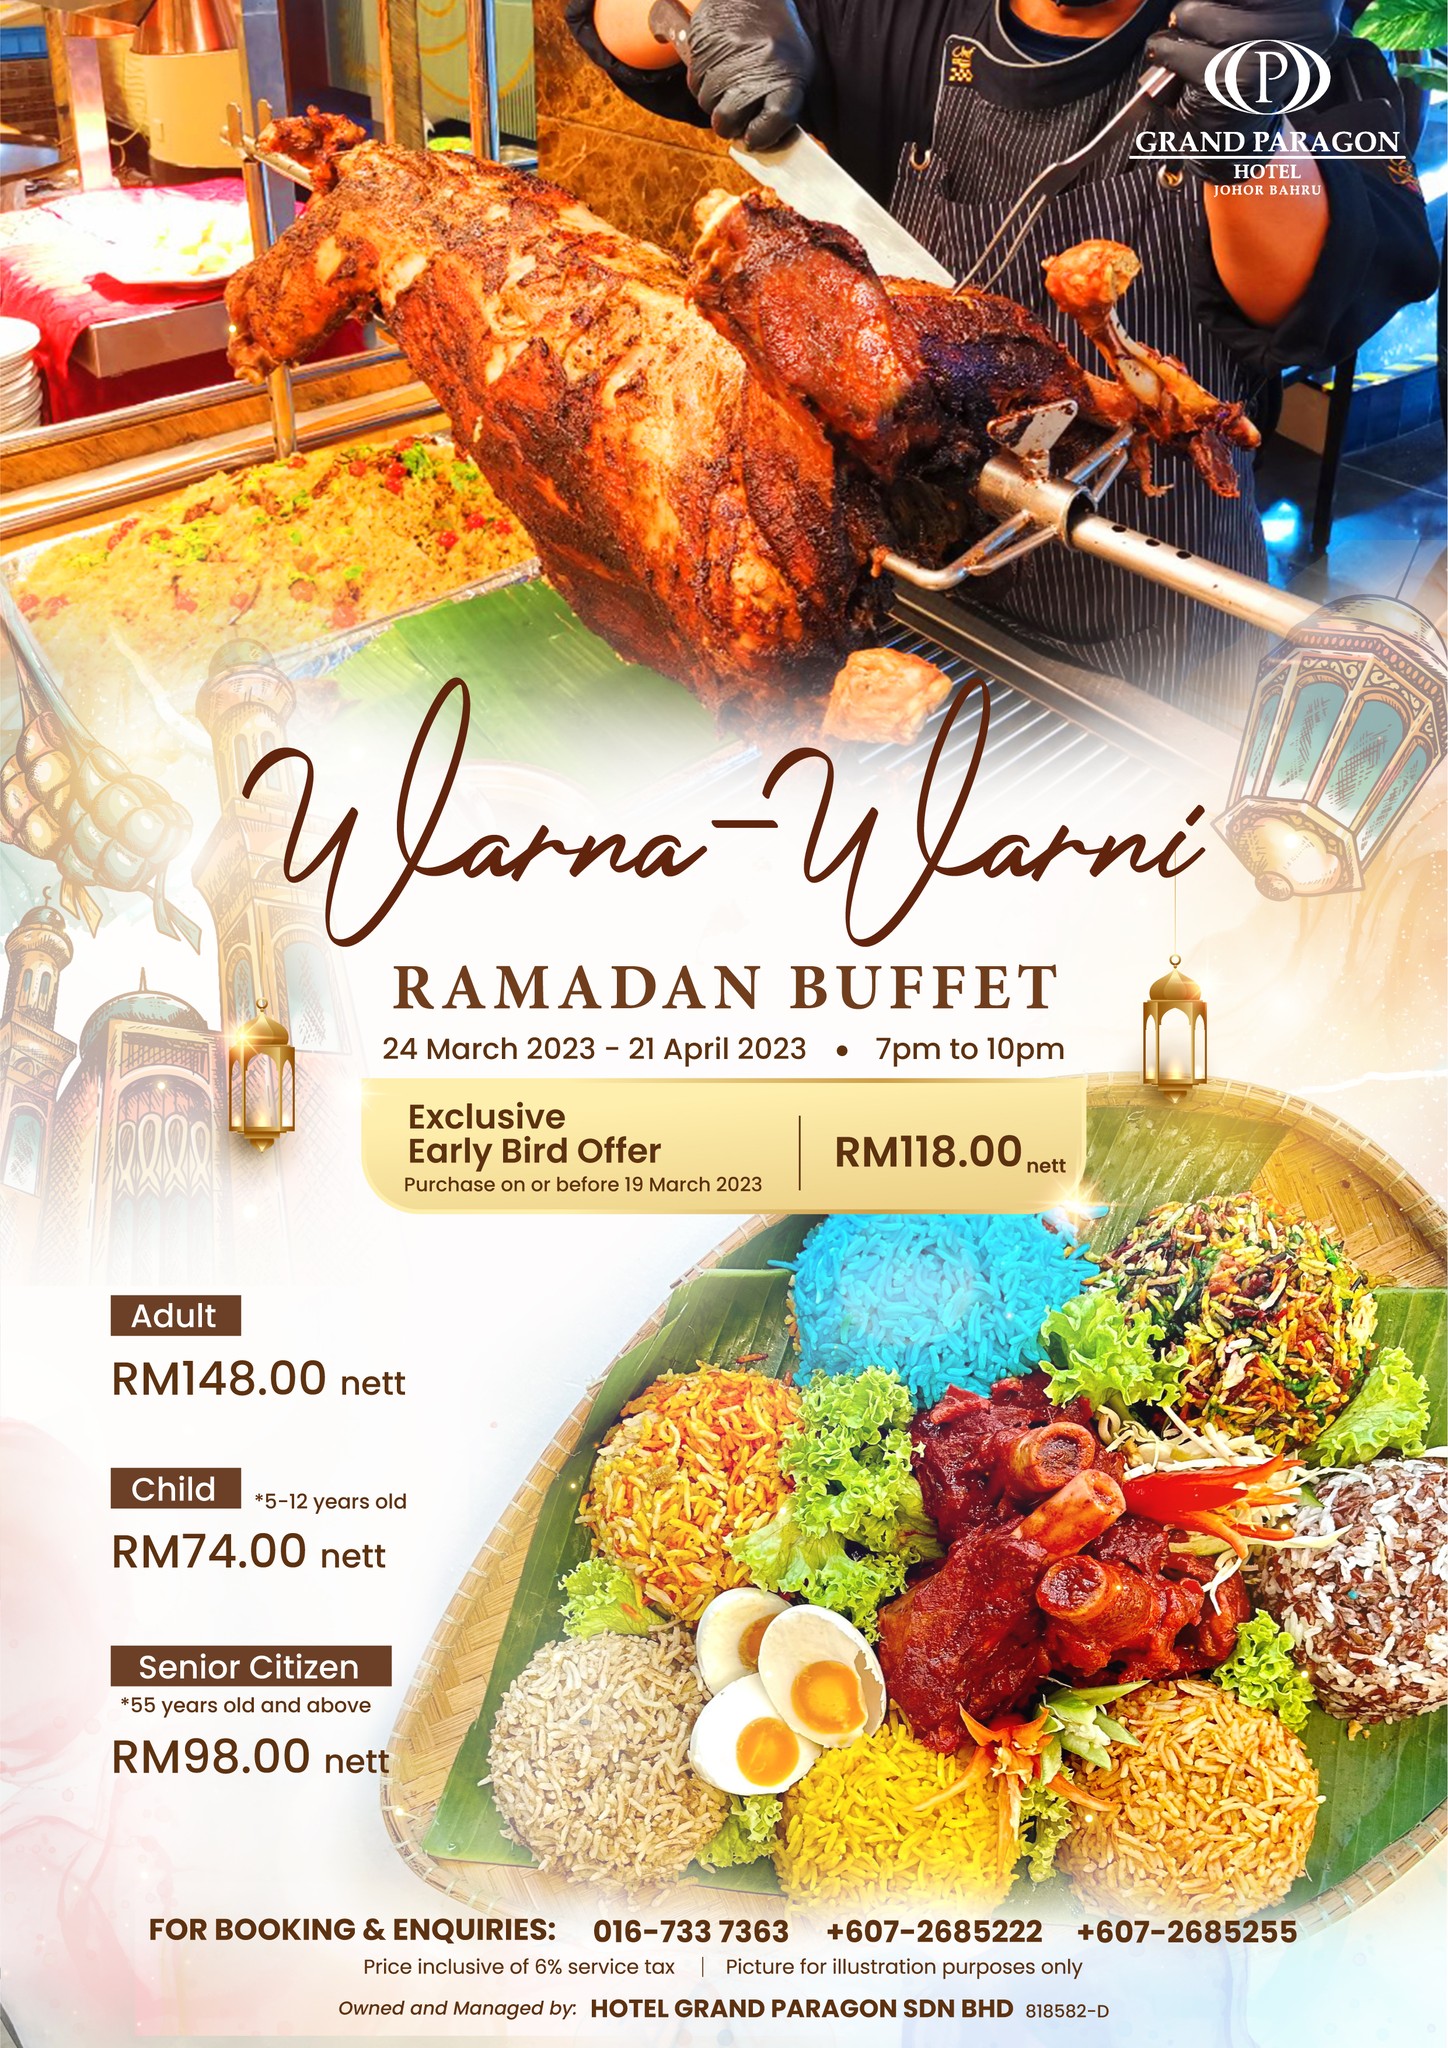 Buffet Ramadan 2023 – Warna Warni Ramadan Buffet di Grand Paragon Hotel Johor Bahru